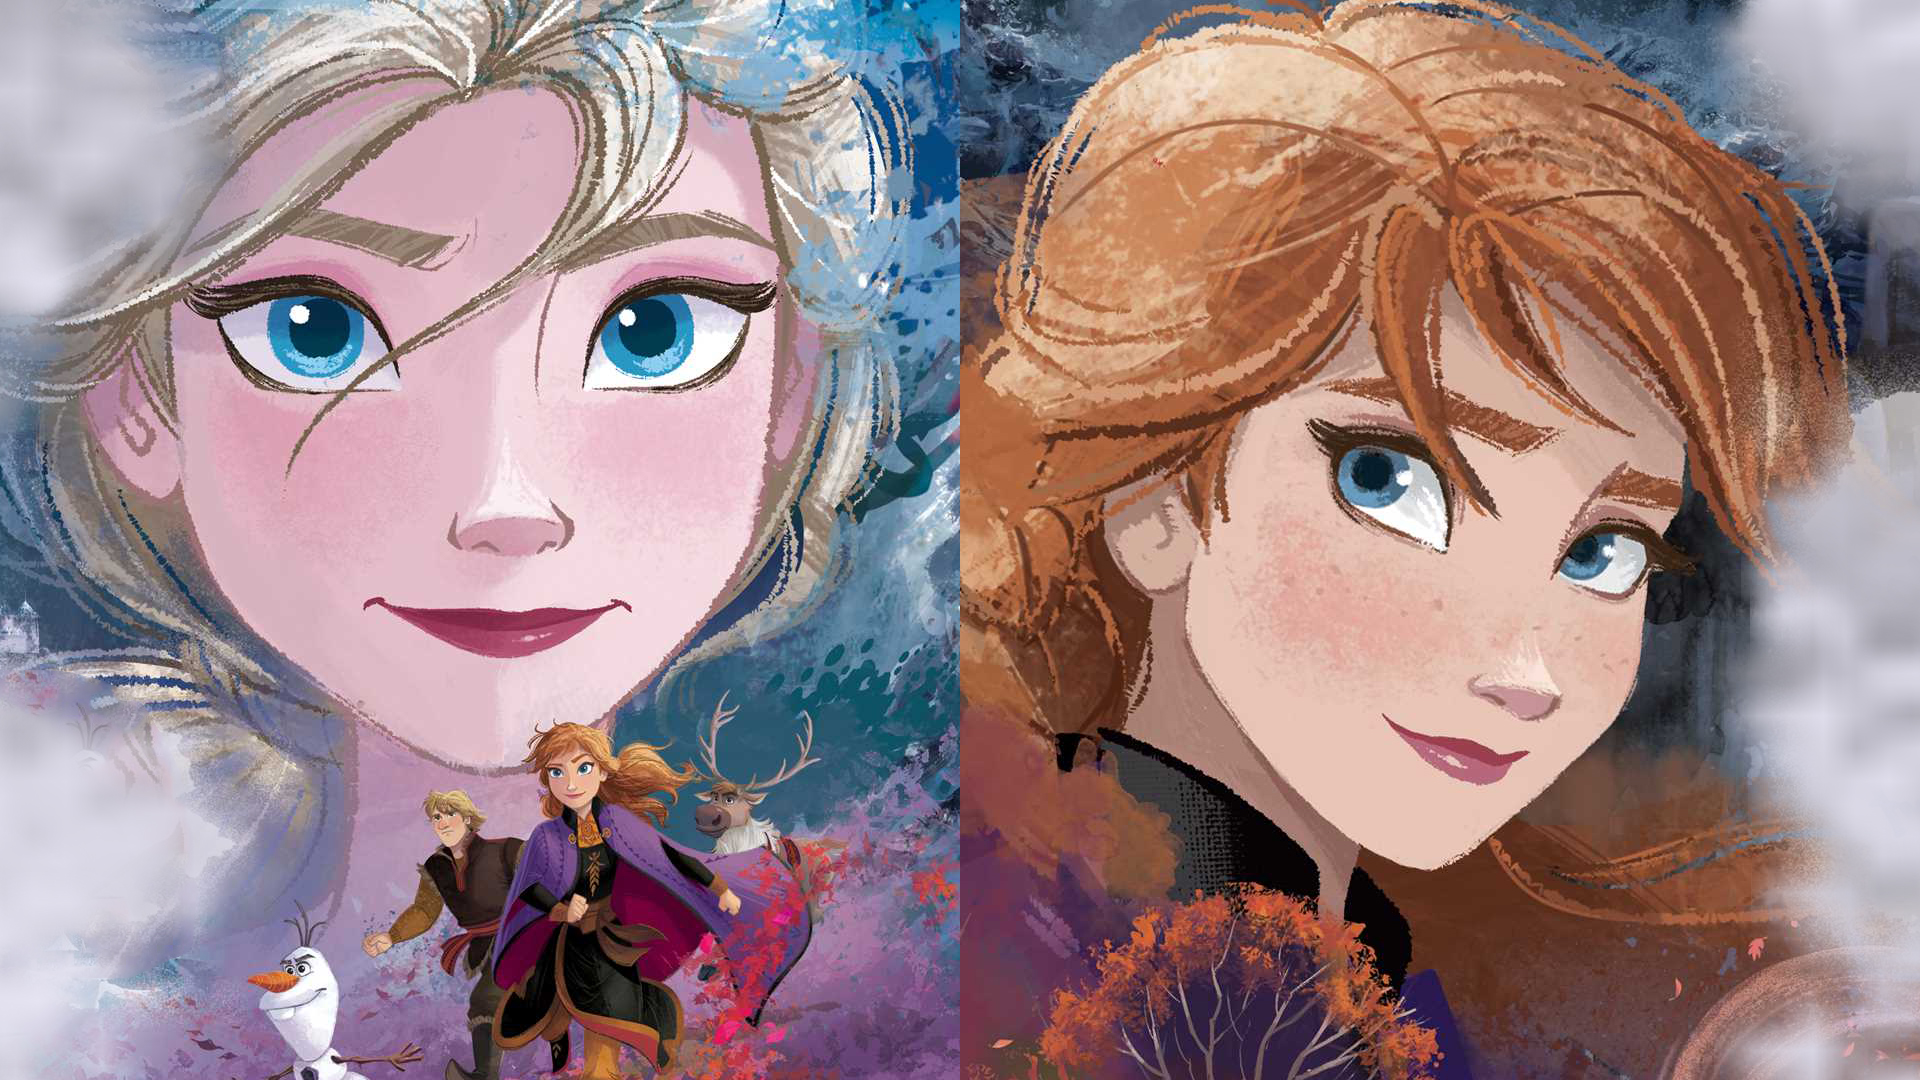 Wallpaper ID 391887  Movie Frozen 2 Phone Wallpaper Elsa Frozen  1080x1920 free download